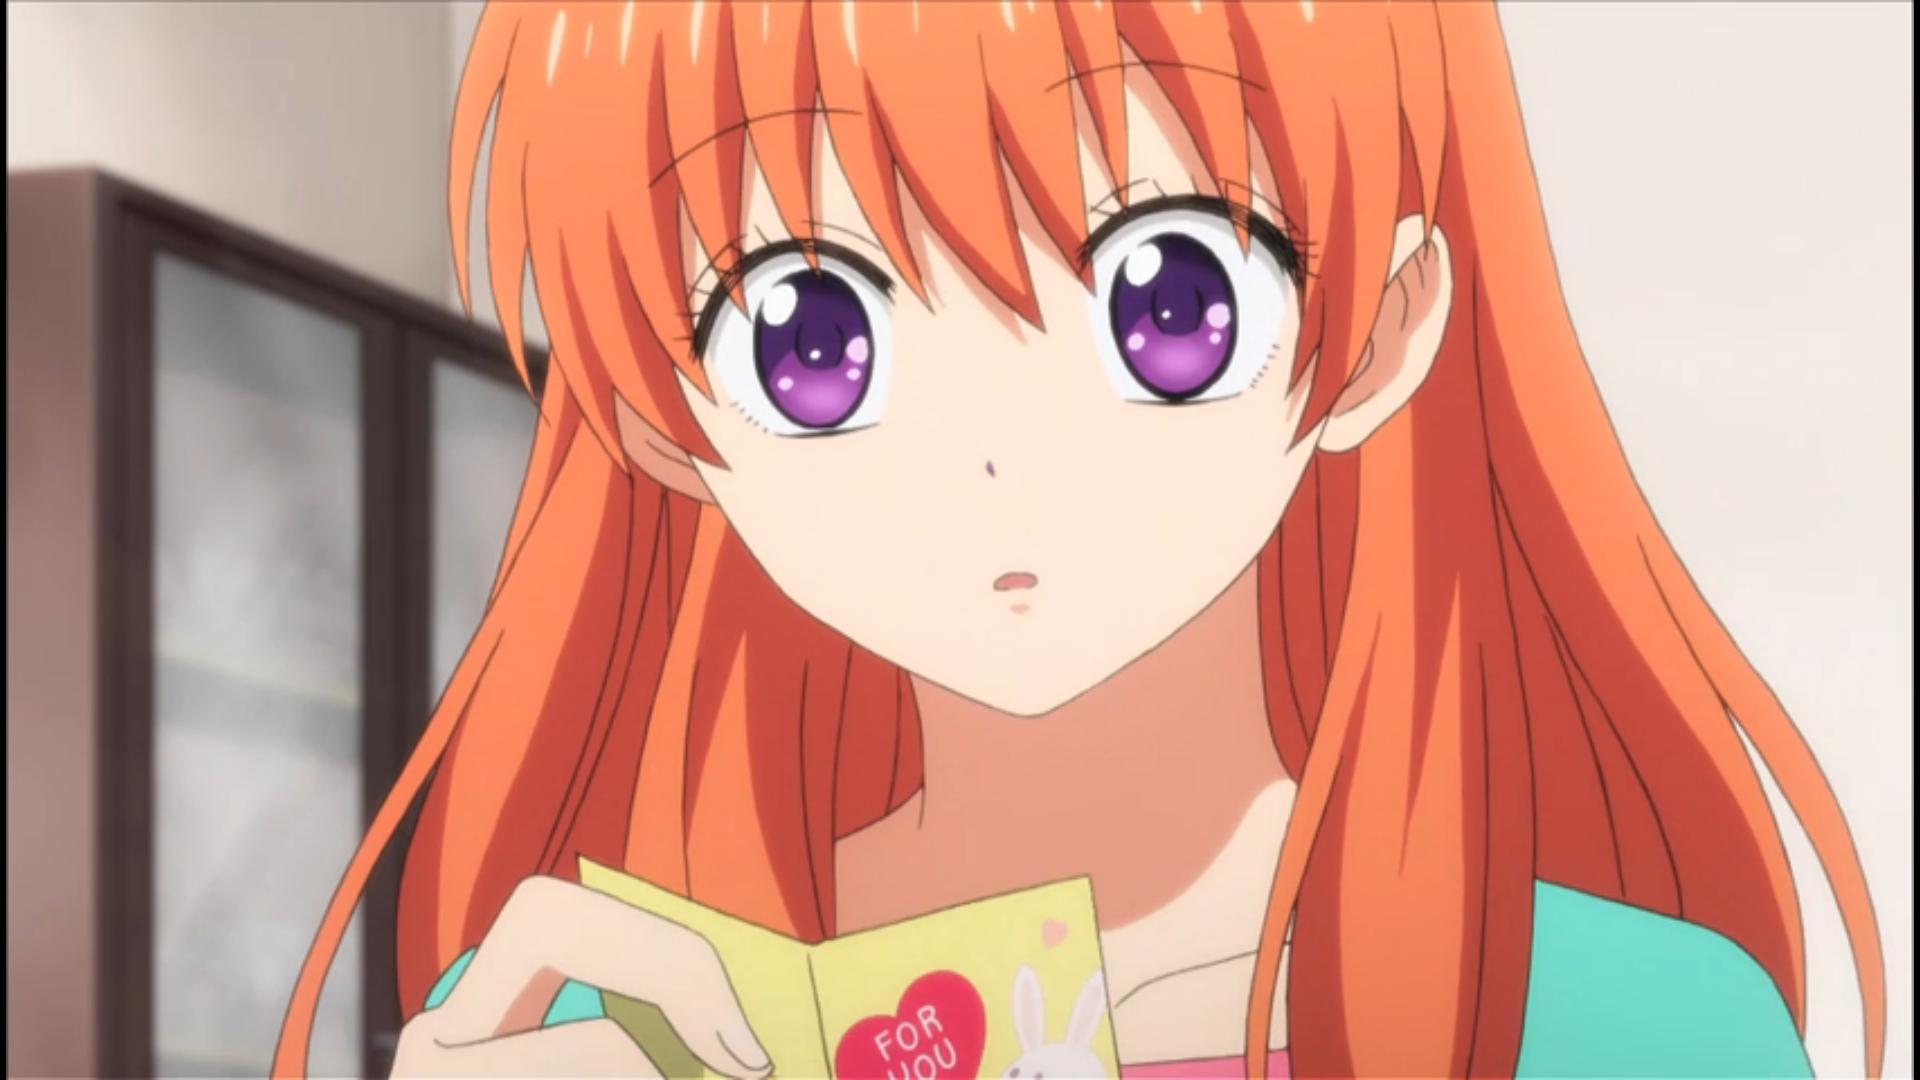 Best anime girl with jeruk, jeruk, orange hair? anime. 